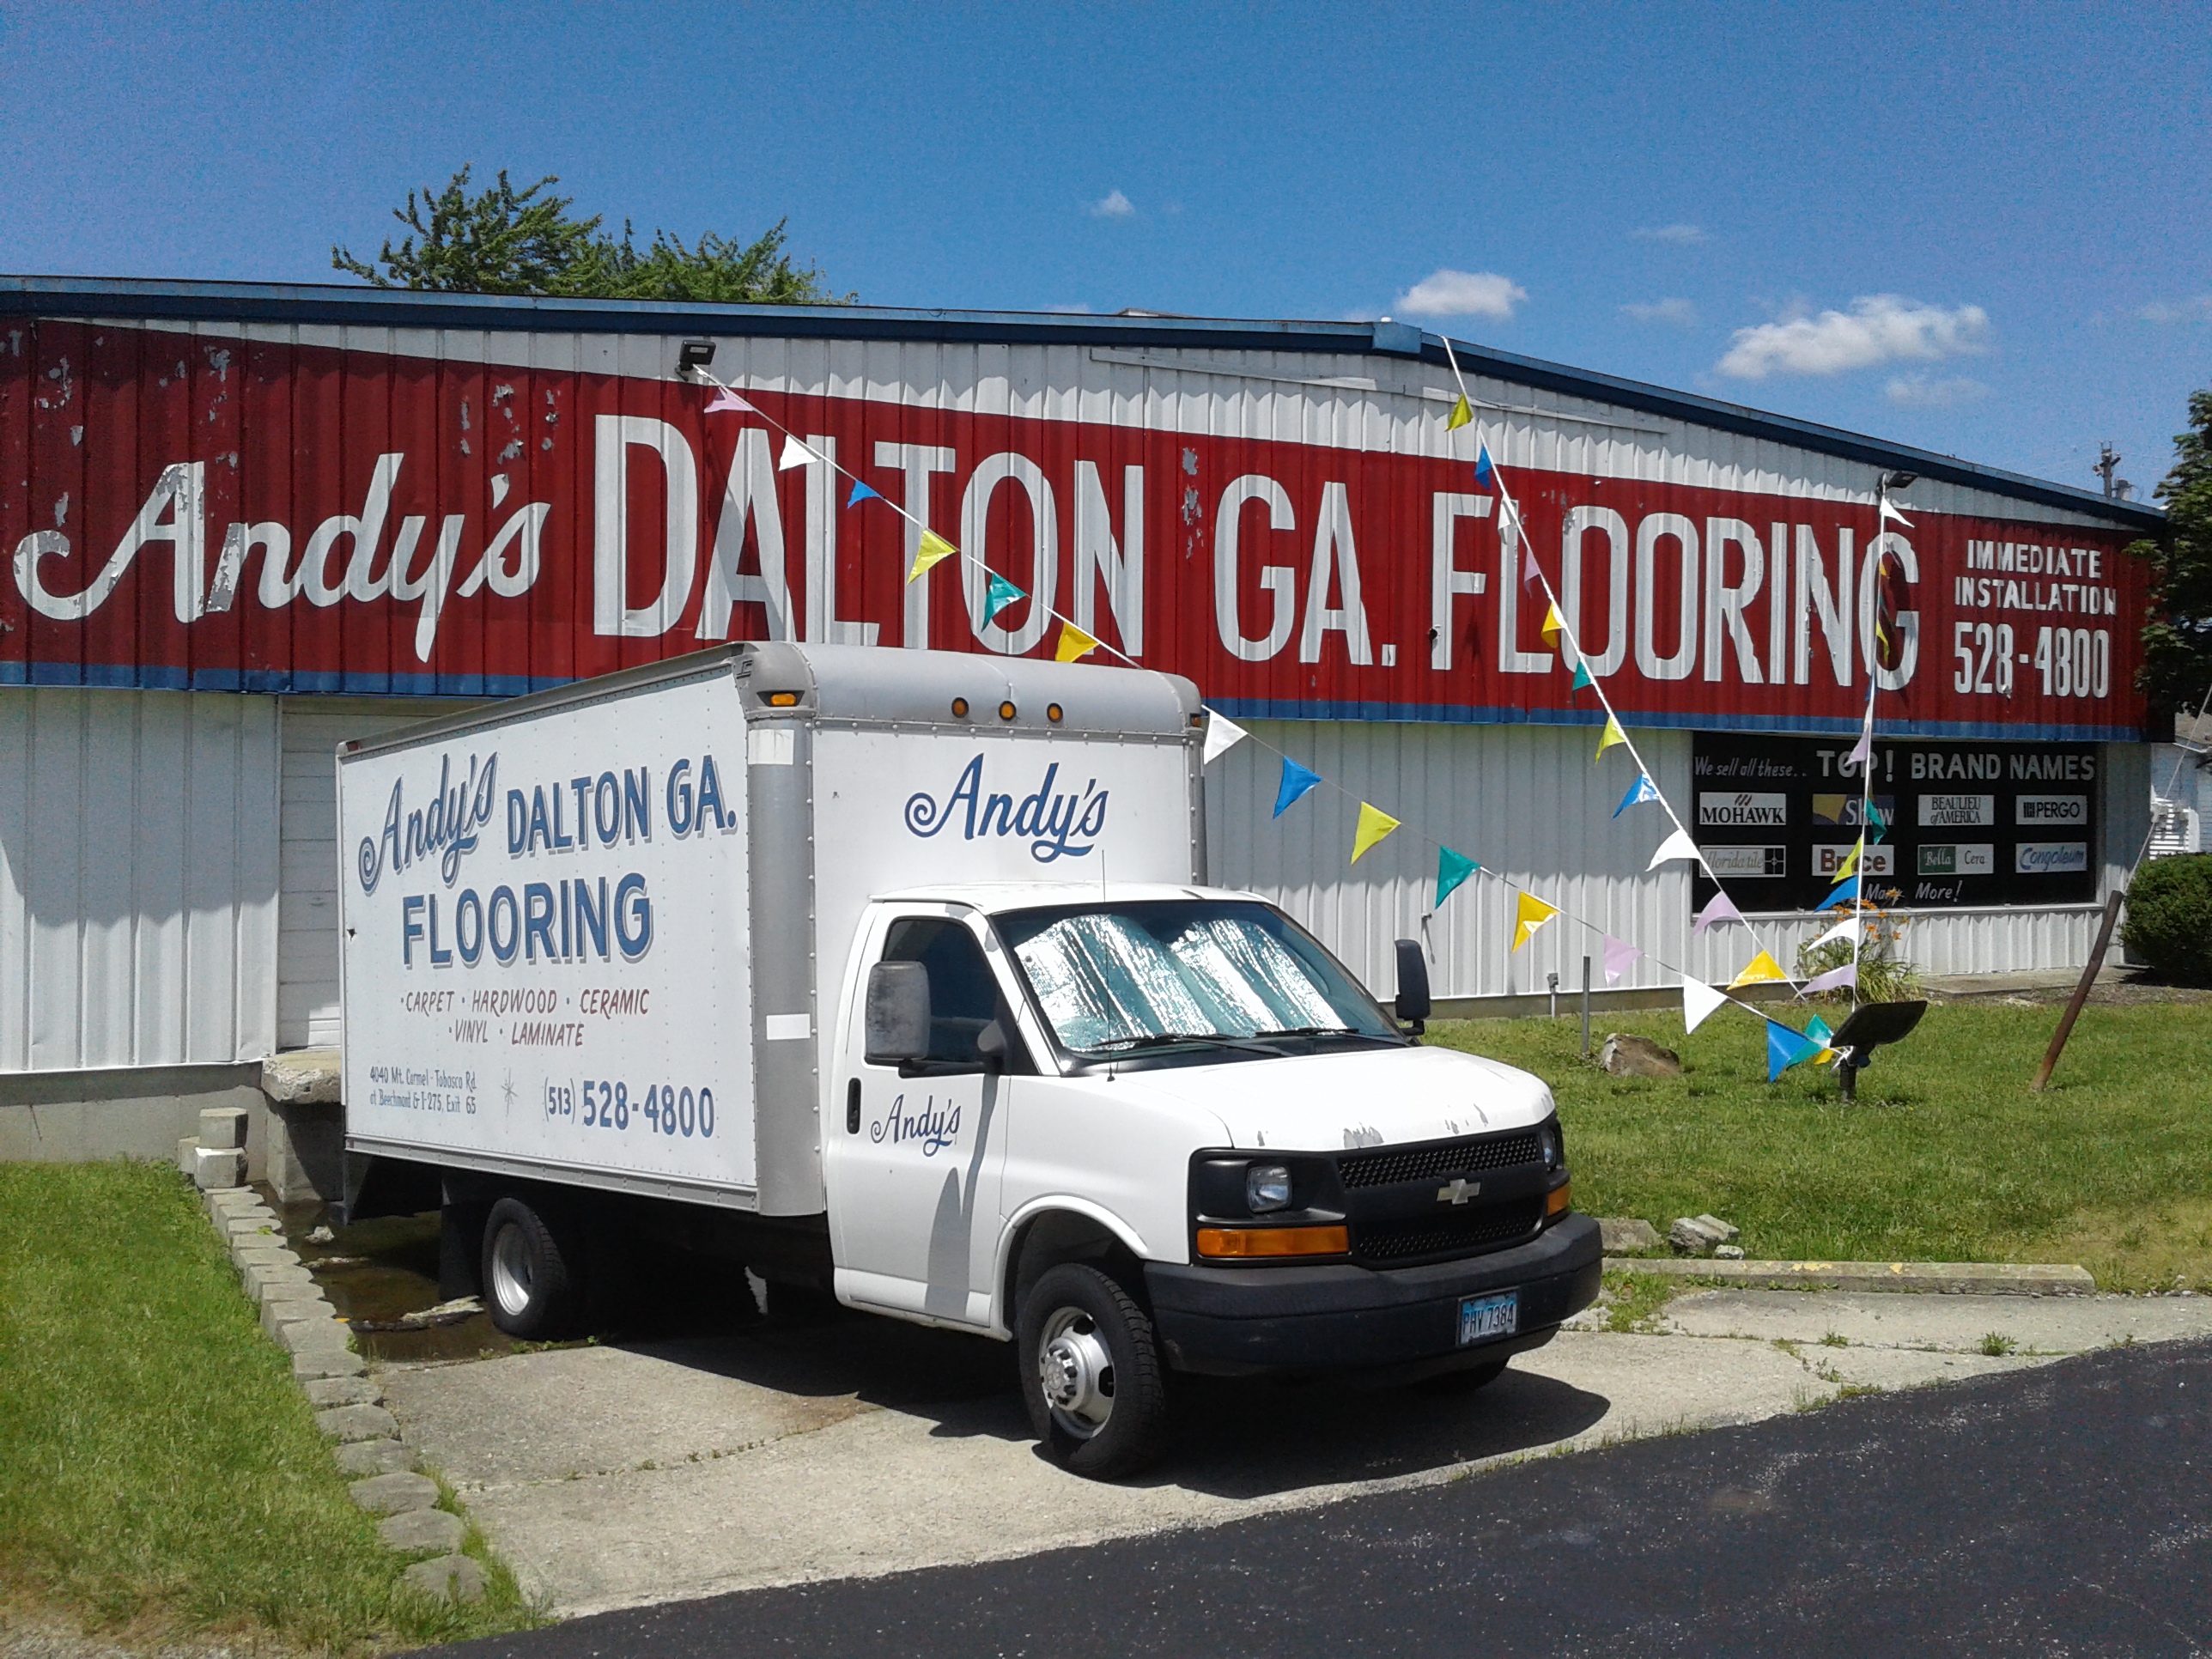 Andy's Dalton GA Flooring Photo